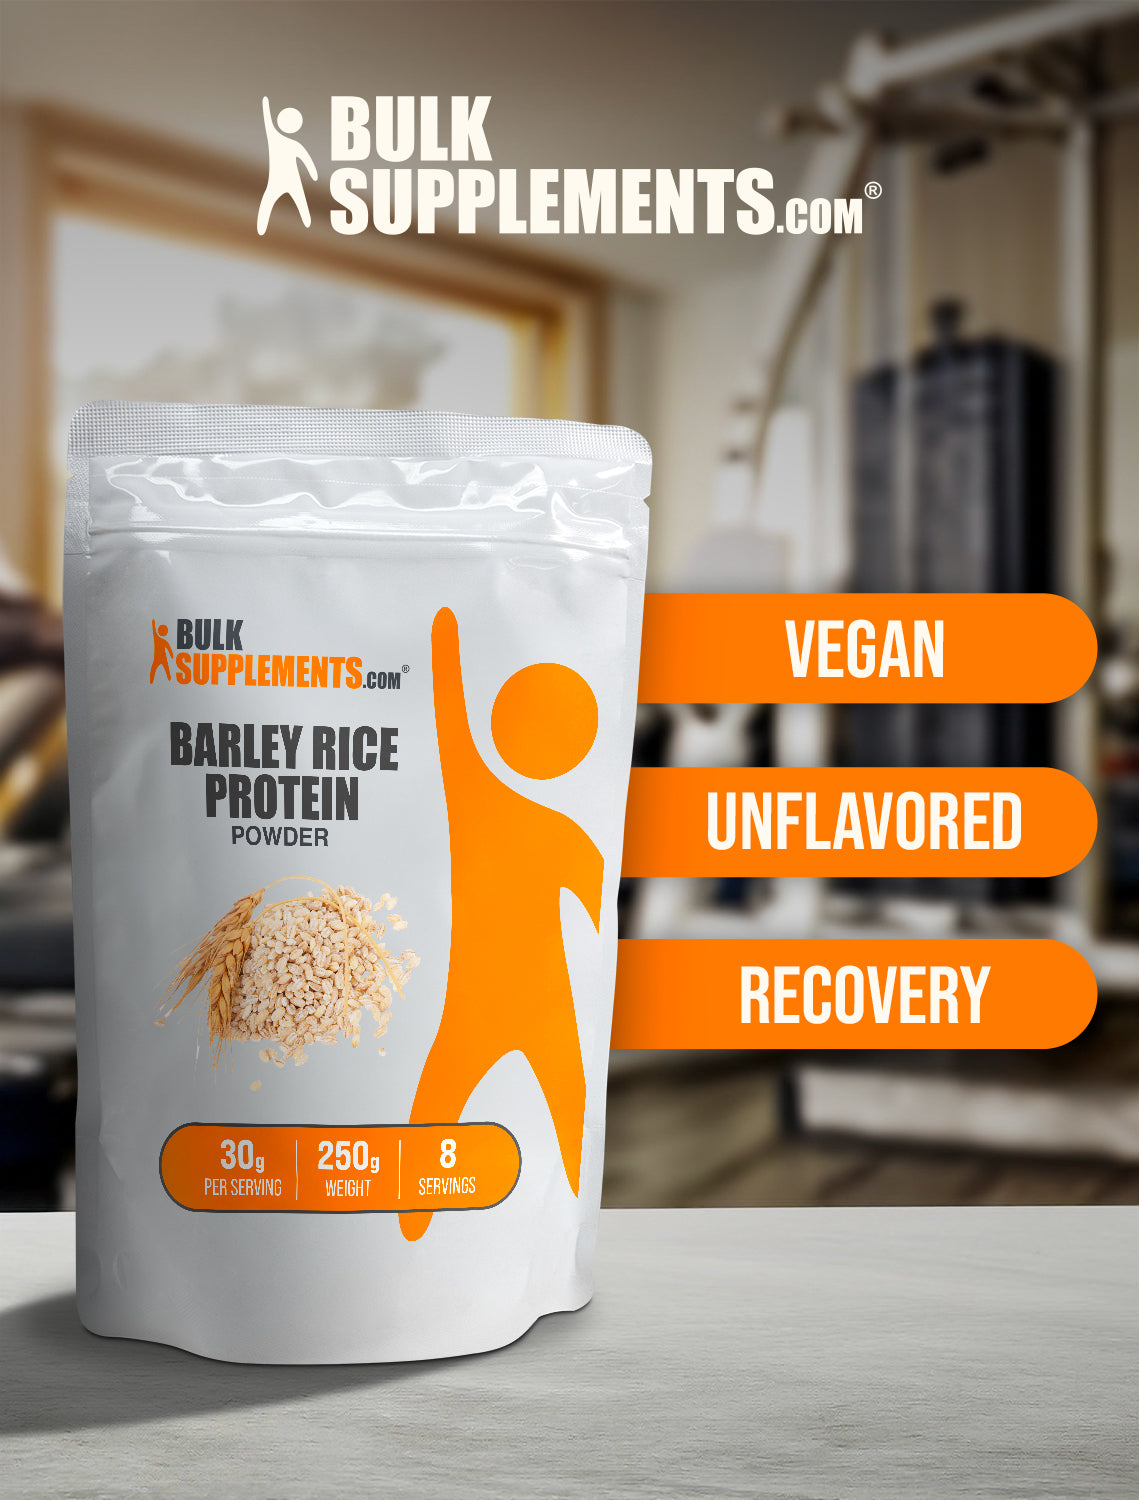 Barley rice protein powder 250g keywords image